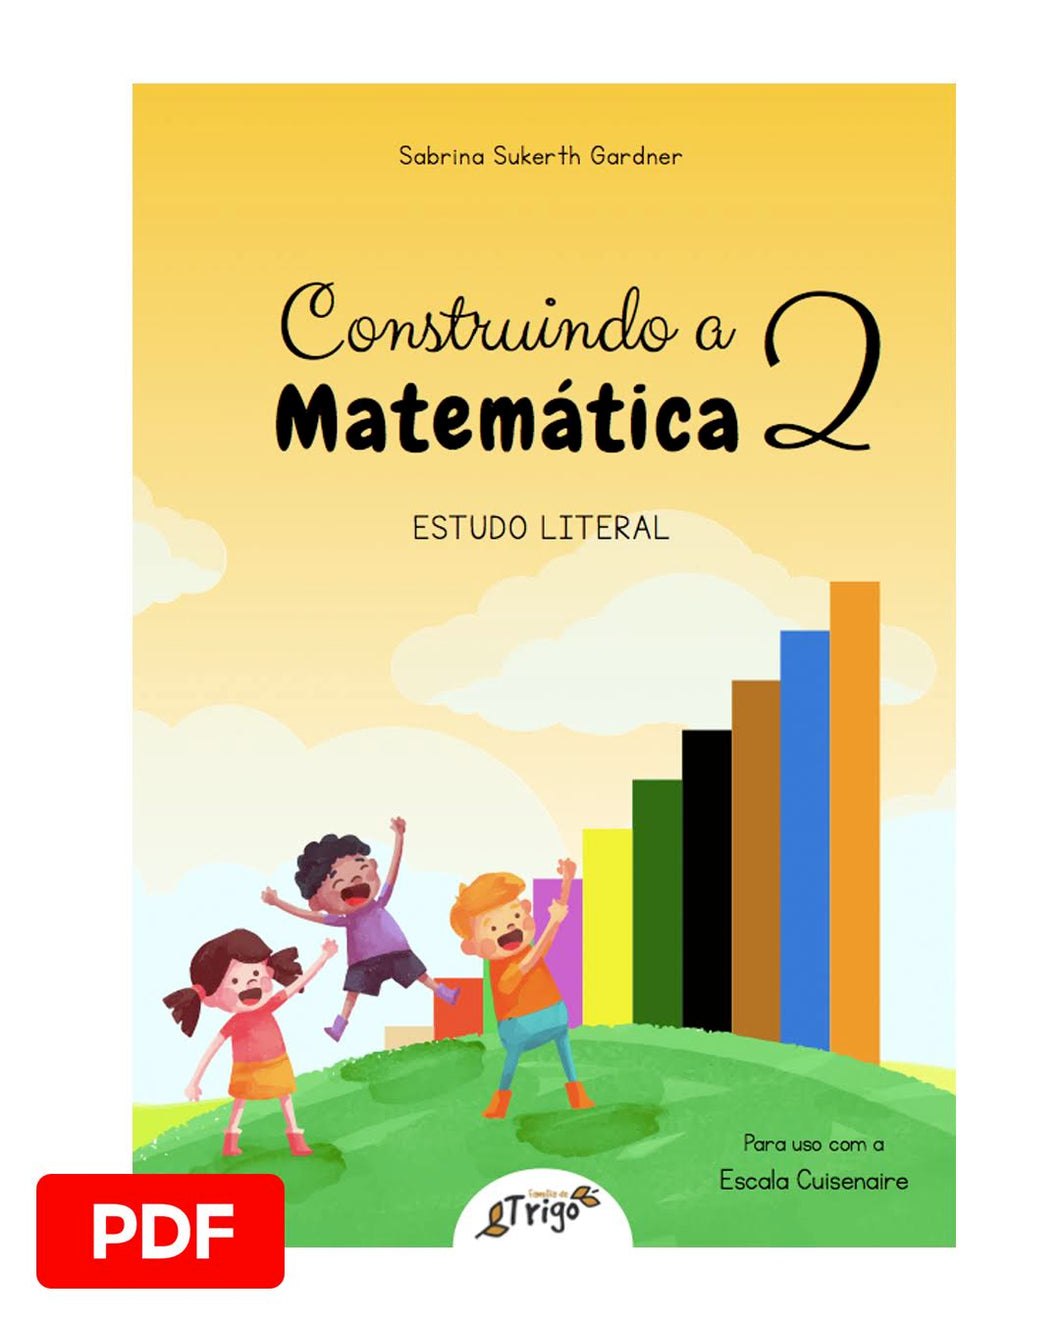 Construindo a Matemática 2 - Estudo literal + Caderno de Exercícios 1 - PDF